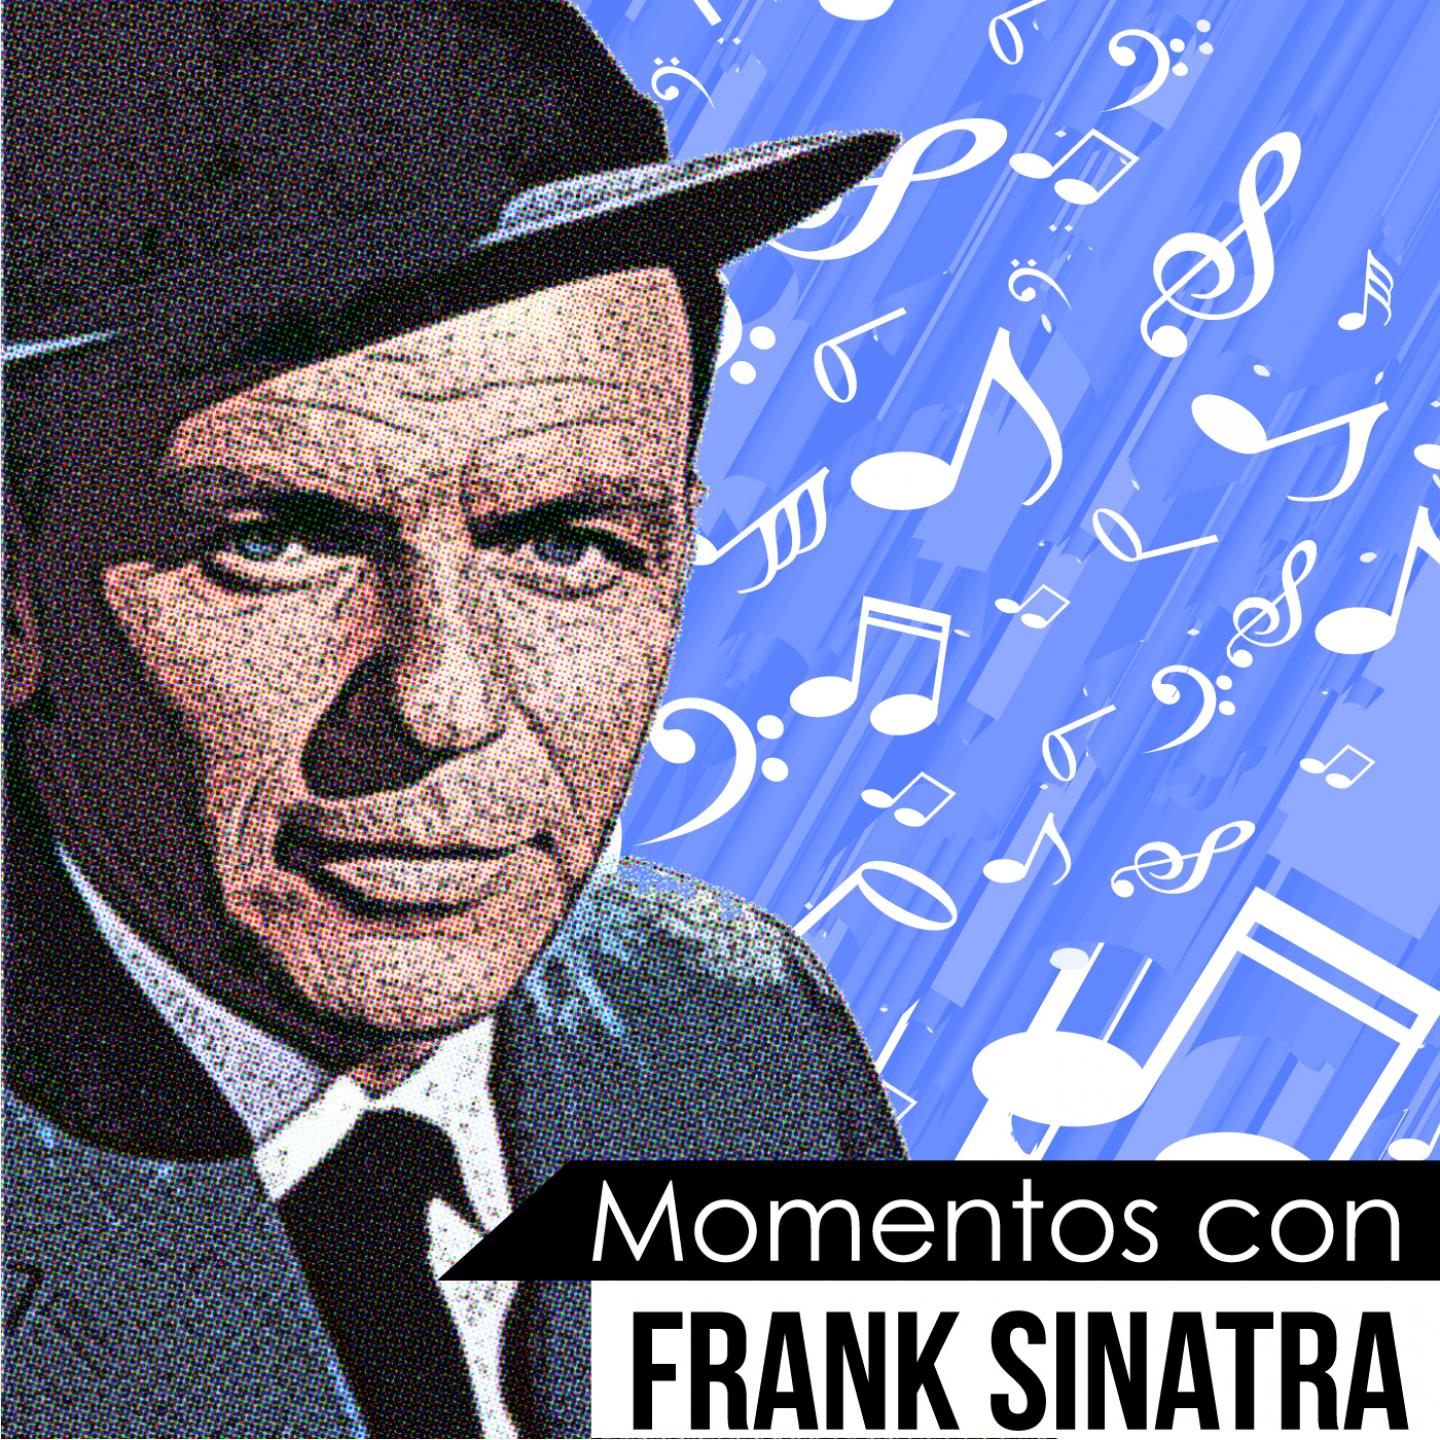 The Girl from Ipanema (Momentos Con Frank Sinatra)